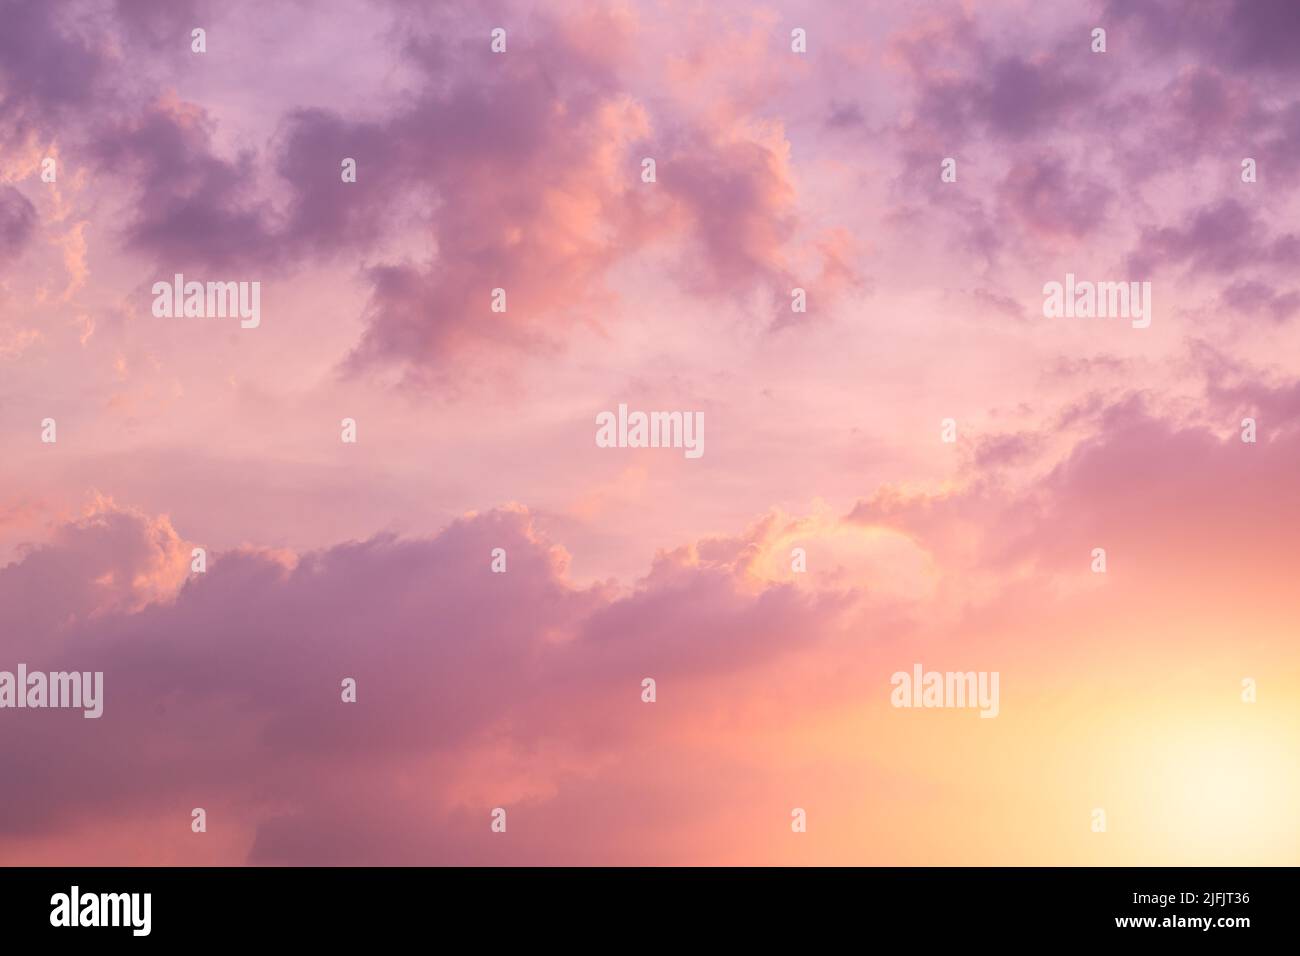 Wunderschöne Skyline im Sommer farbenfrohe lila Himmel Wolke Sonnenuntergang oder Morgensonne Guten Tag. Stockfoto